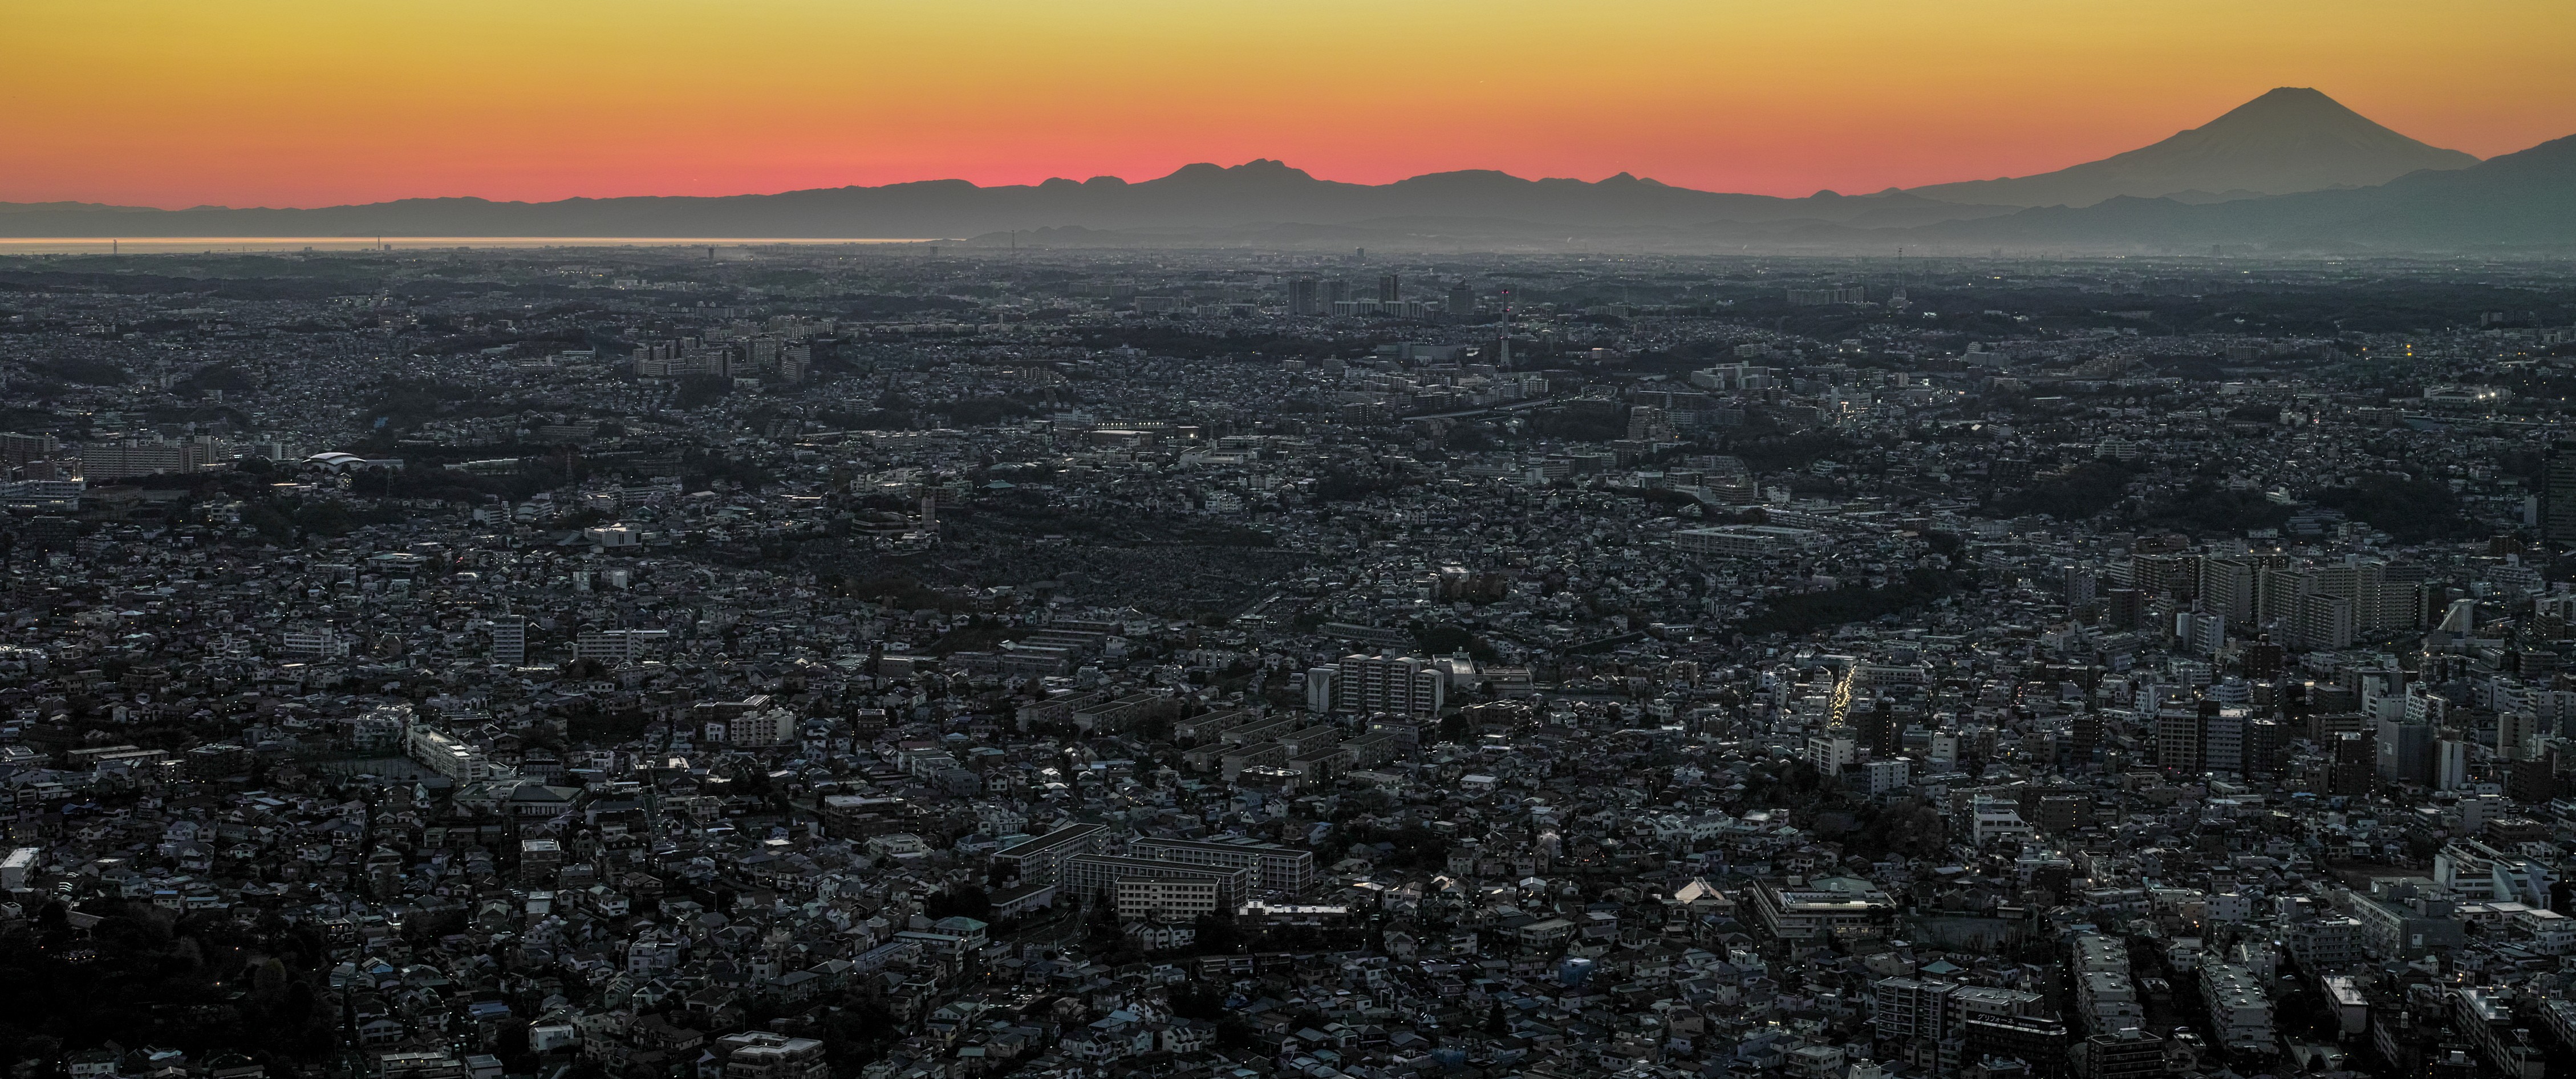 General 4517x1892 city Japan Tokyo Mount Fuji cityscape sunrise Asia orange sky ultrawide low light aerial view